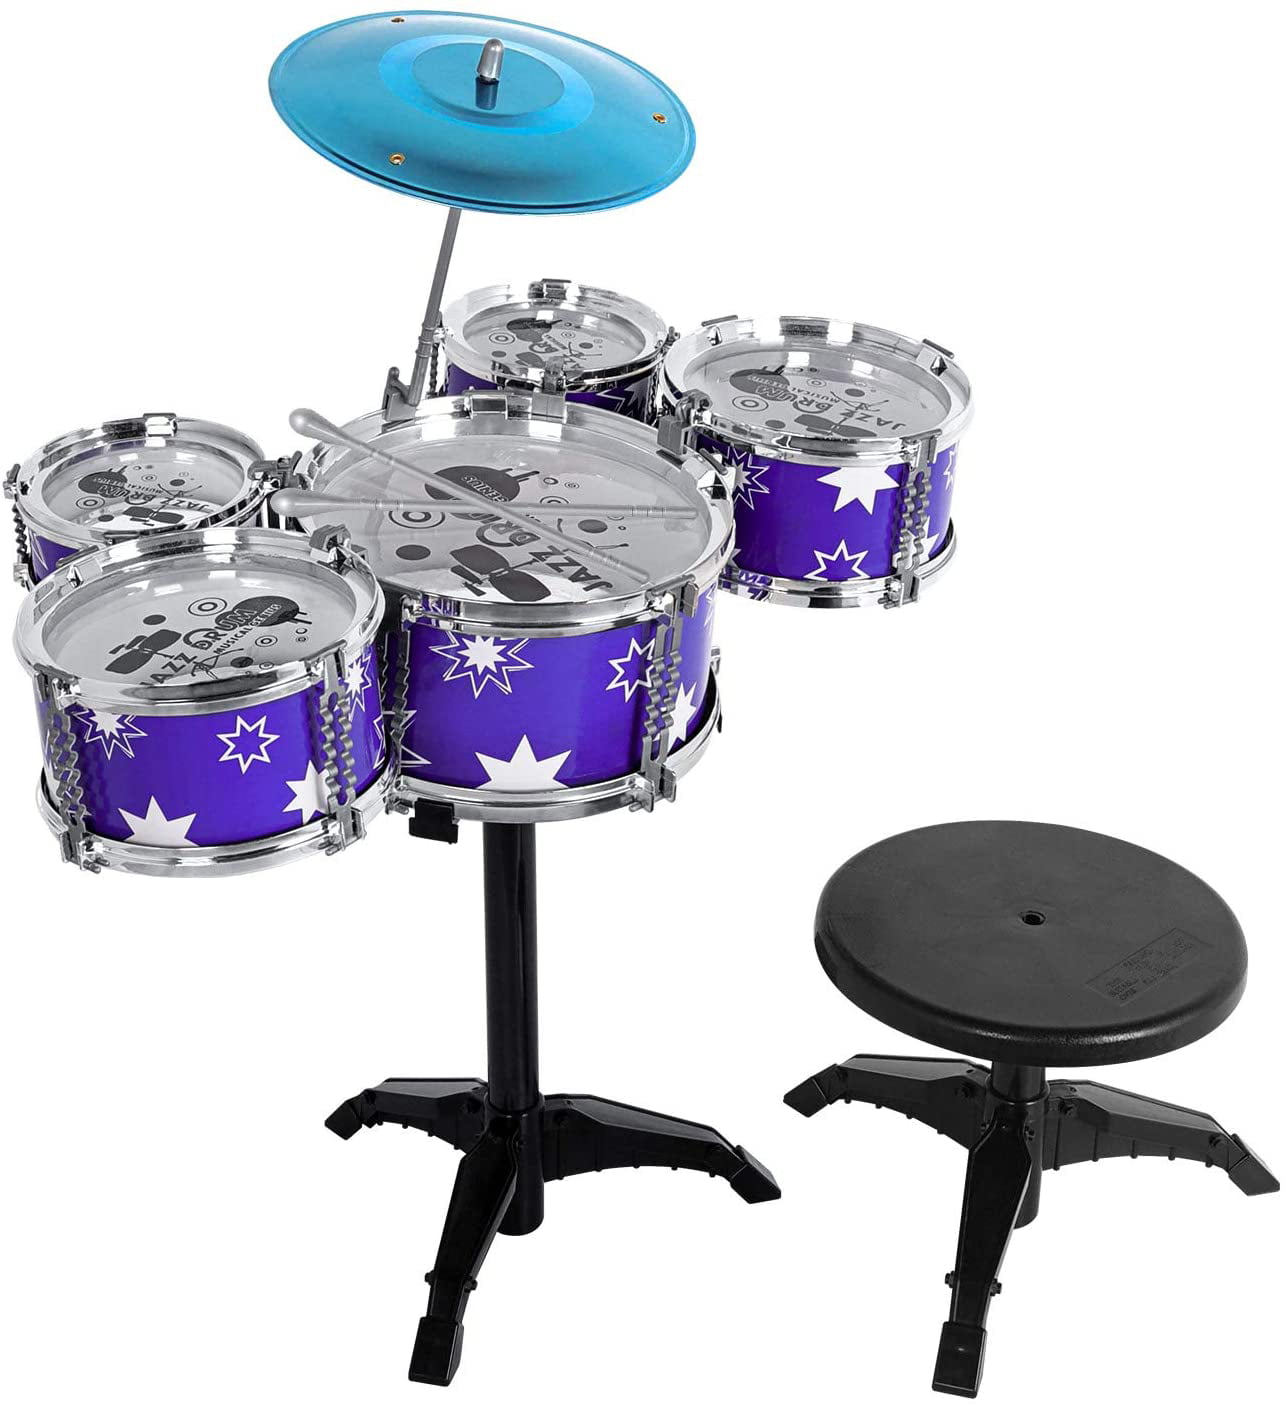 7 Pcs Kids Toys Drum Set Musical Instrument W/ Stool Drumsticks Black Xmas Gift 